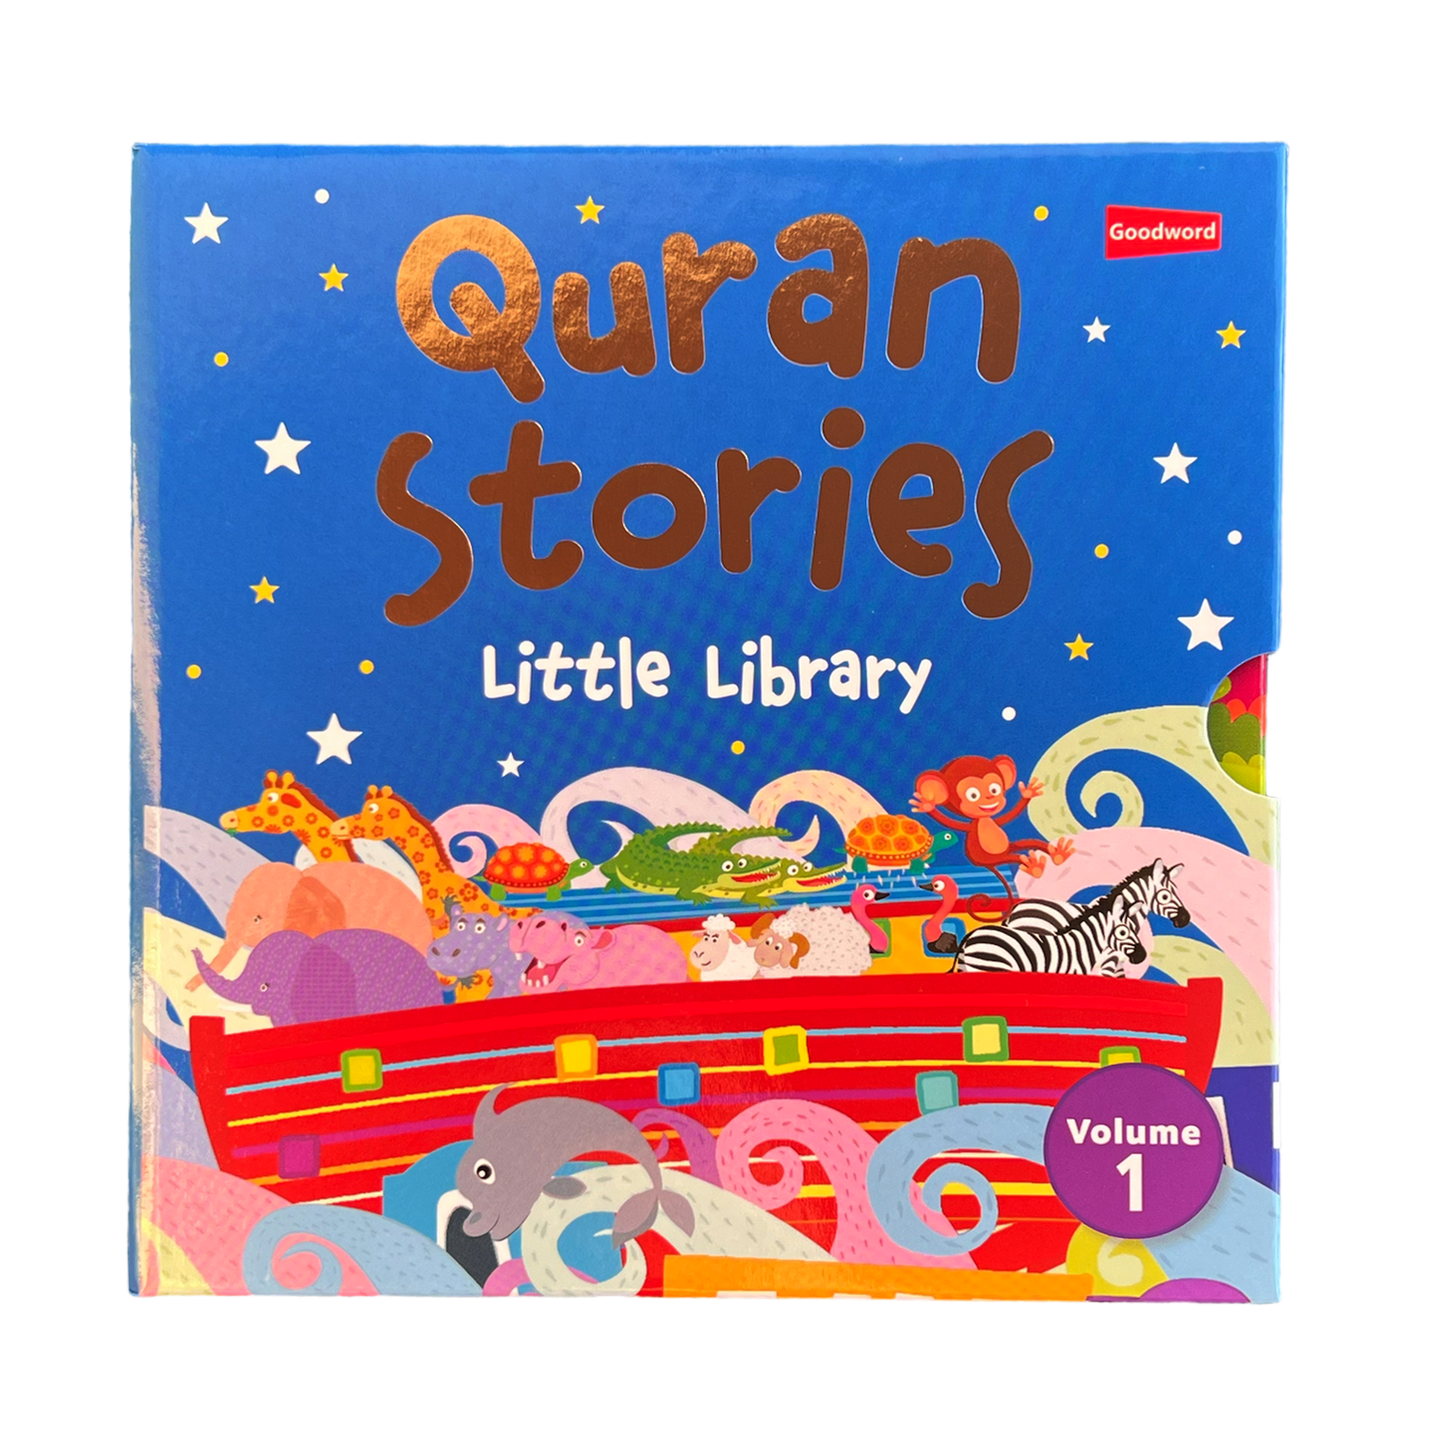 Quran Stories - Little Library - Vol.1 | 4 Board Books Set